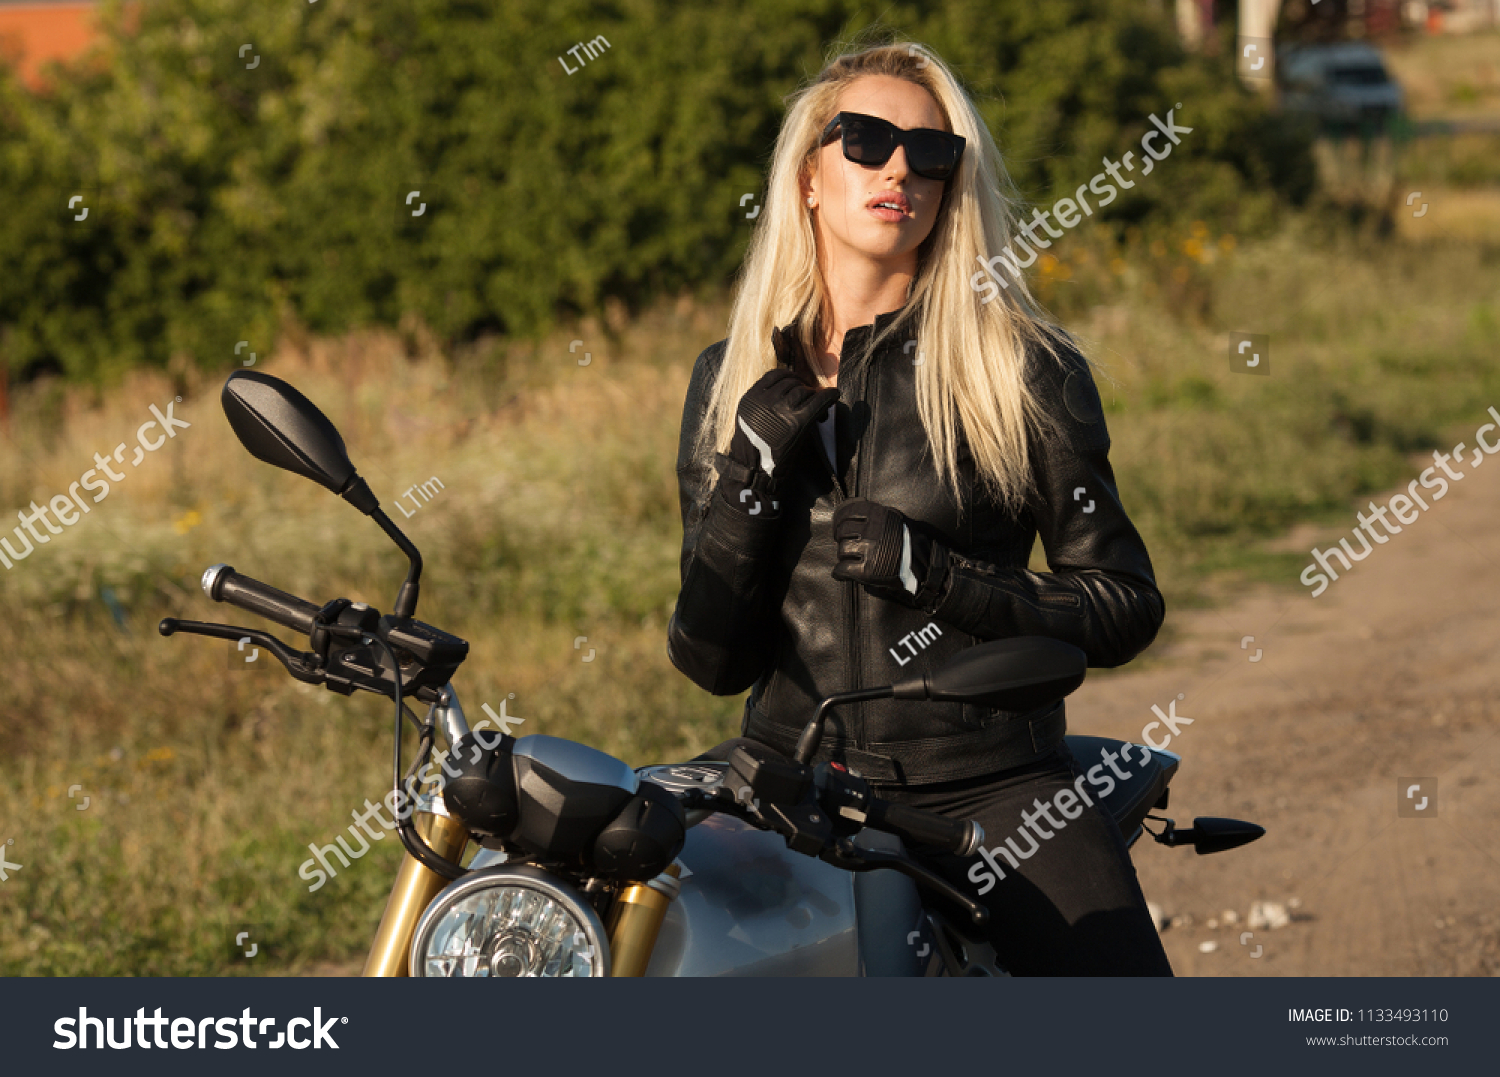 carolina vaca recommends Pictures Of Biker Woman